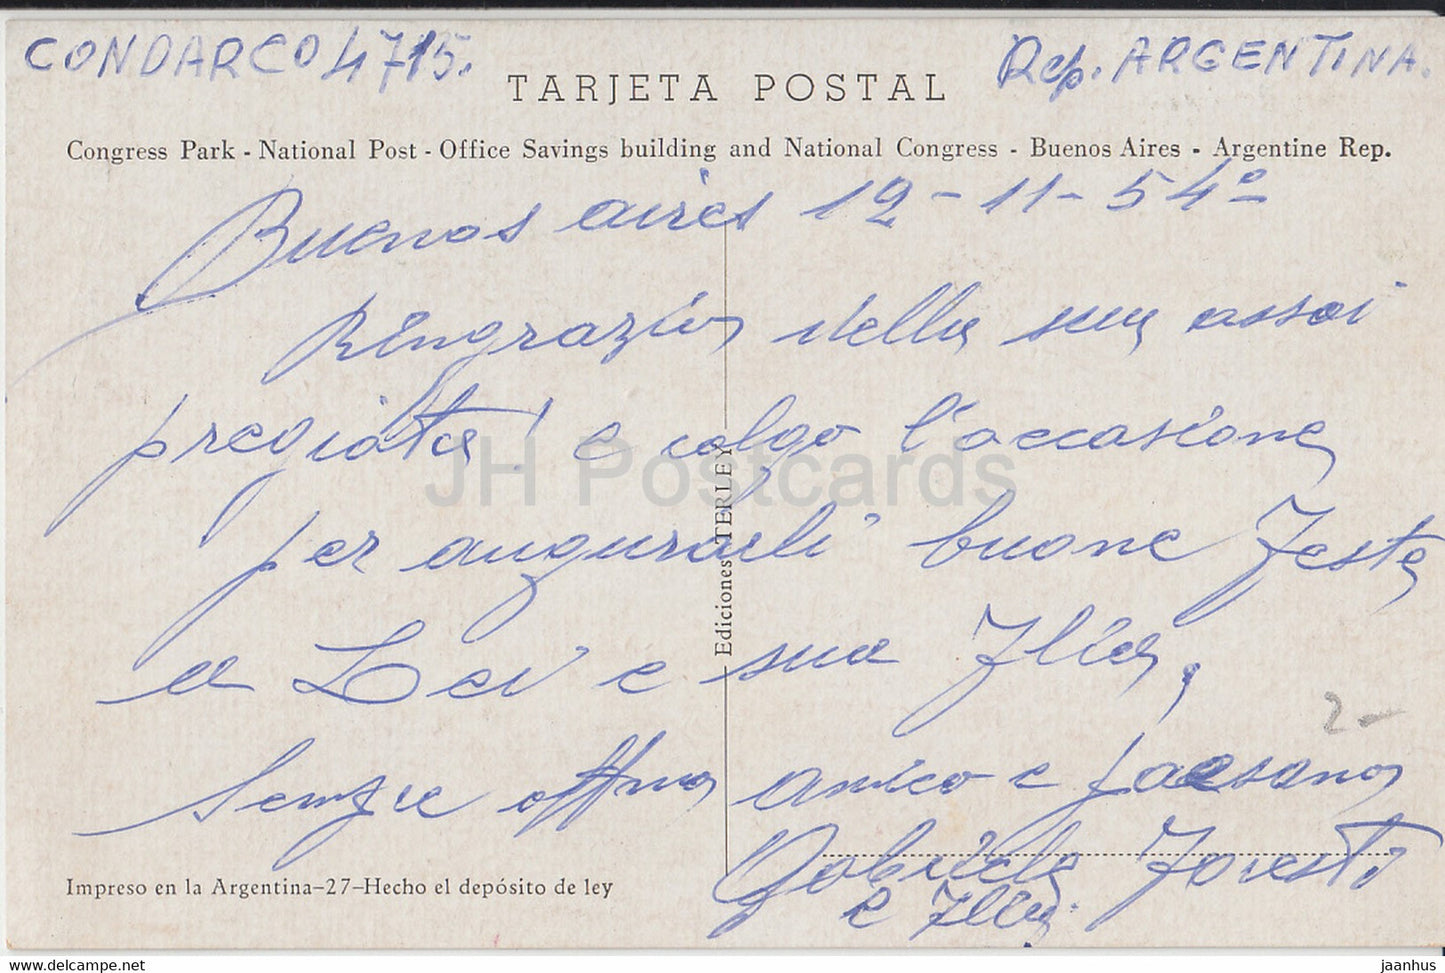 Buenos Aires – Plaza del Congreso – 241 – alte Postkarte – 1954 – Argentinien – gebraucht